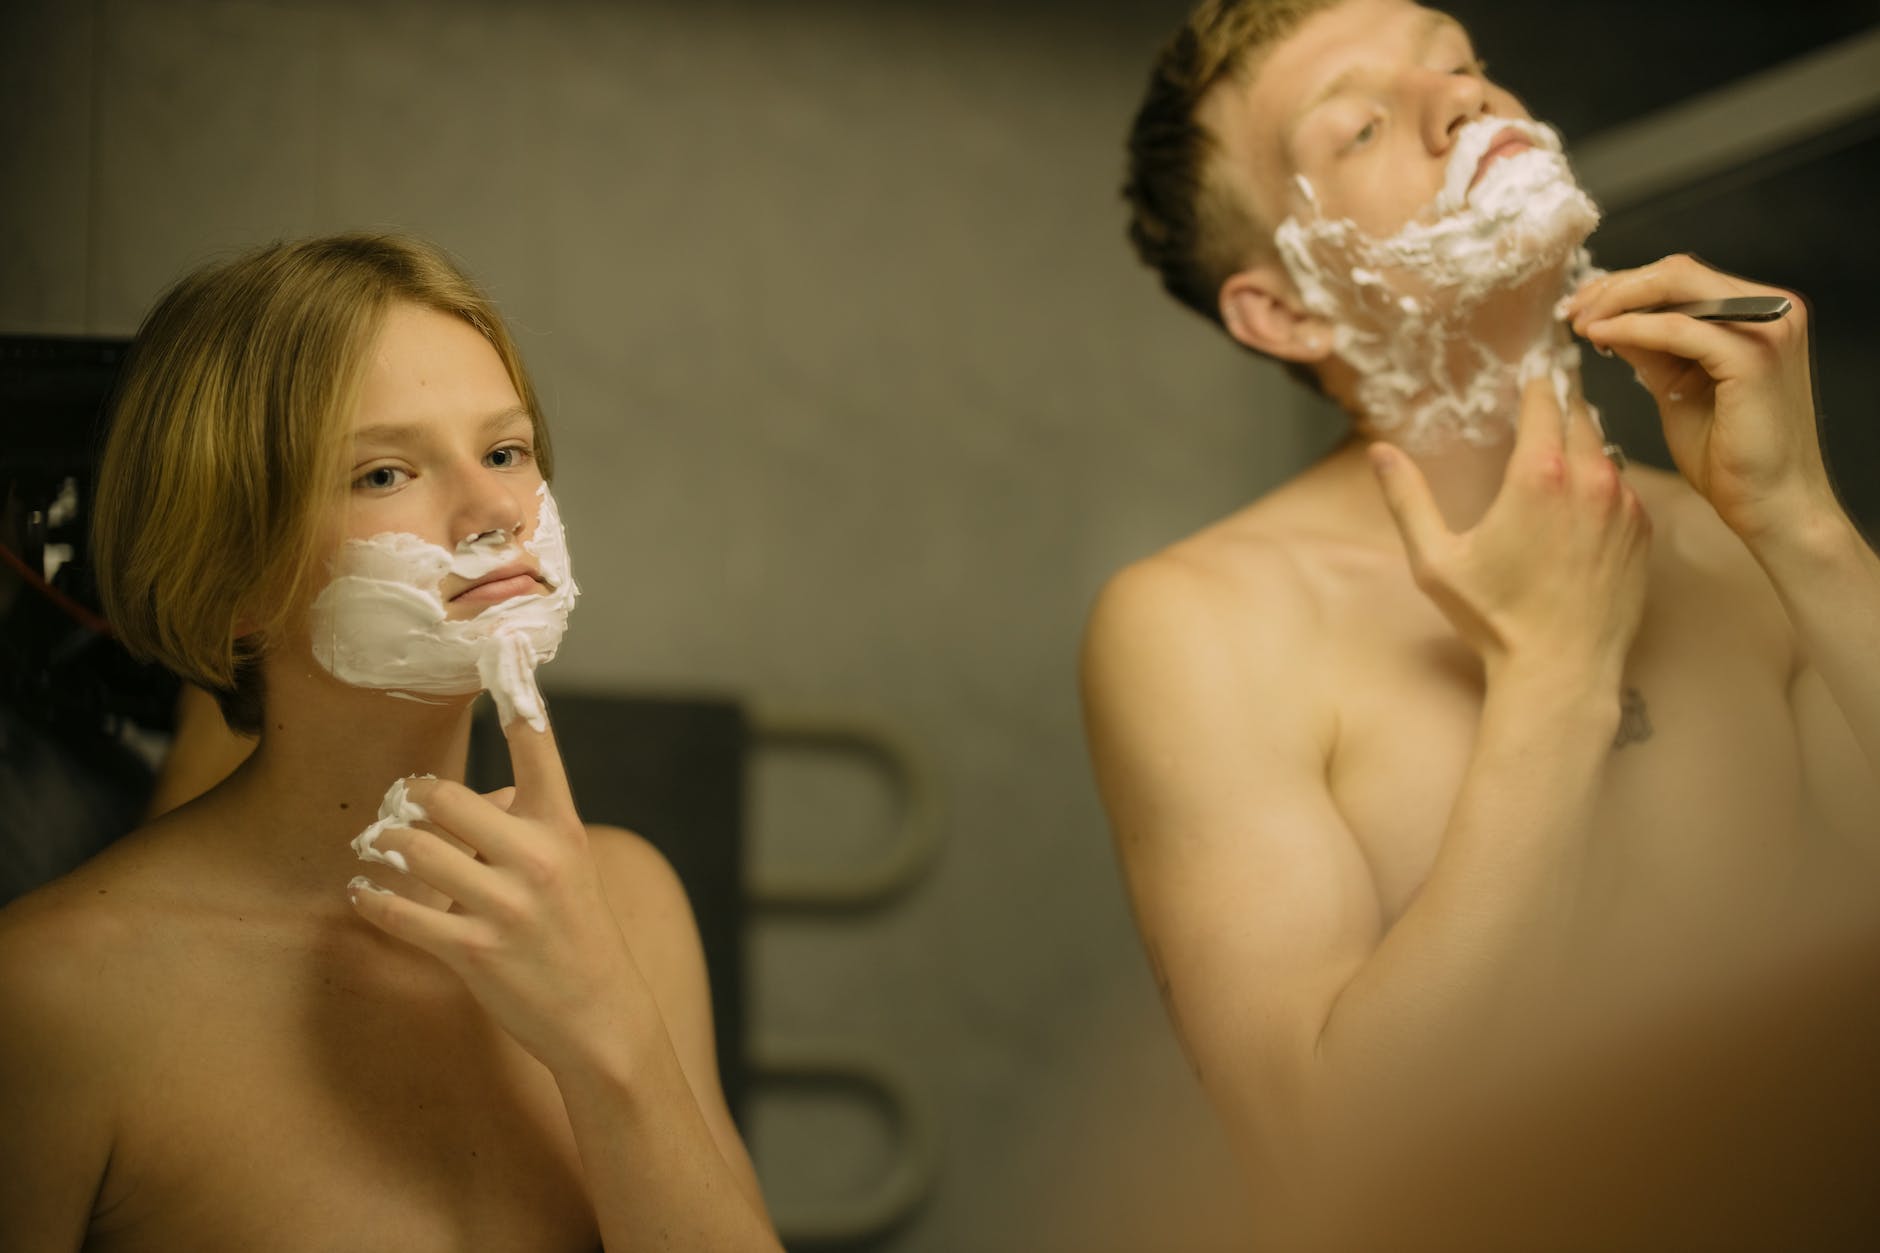 a shirtless boys with shaving cream on their face
Se raser, c'est s'aimer